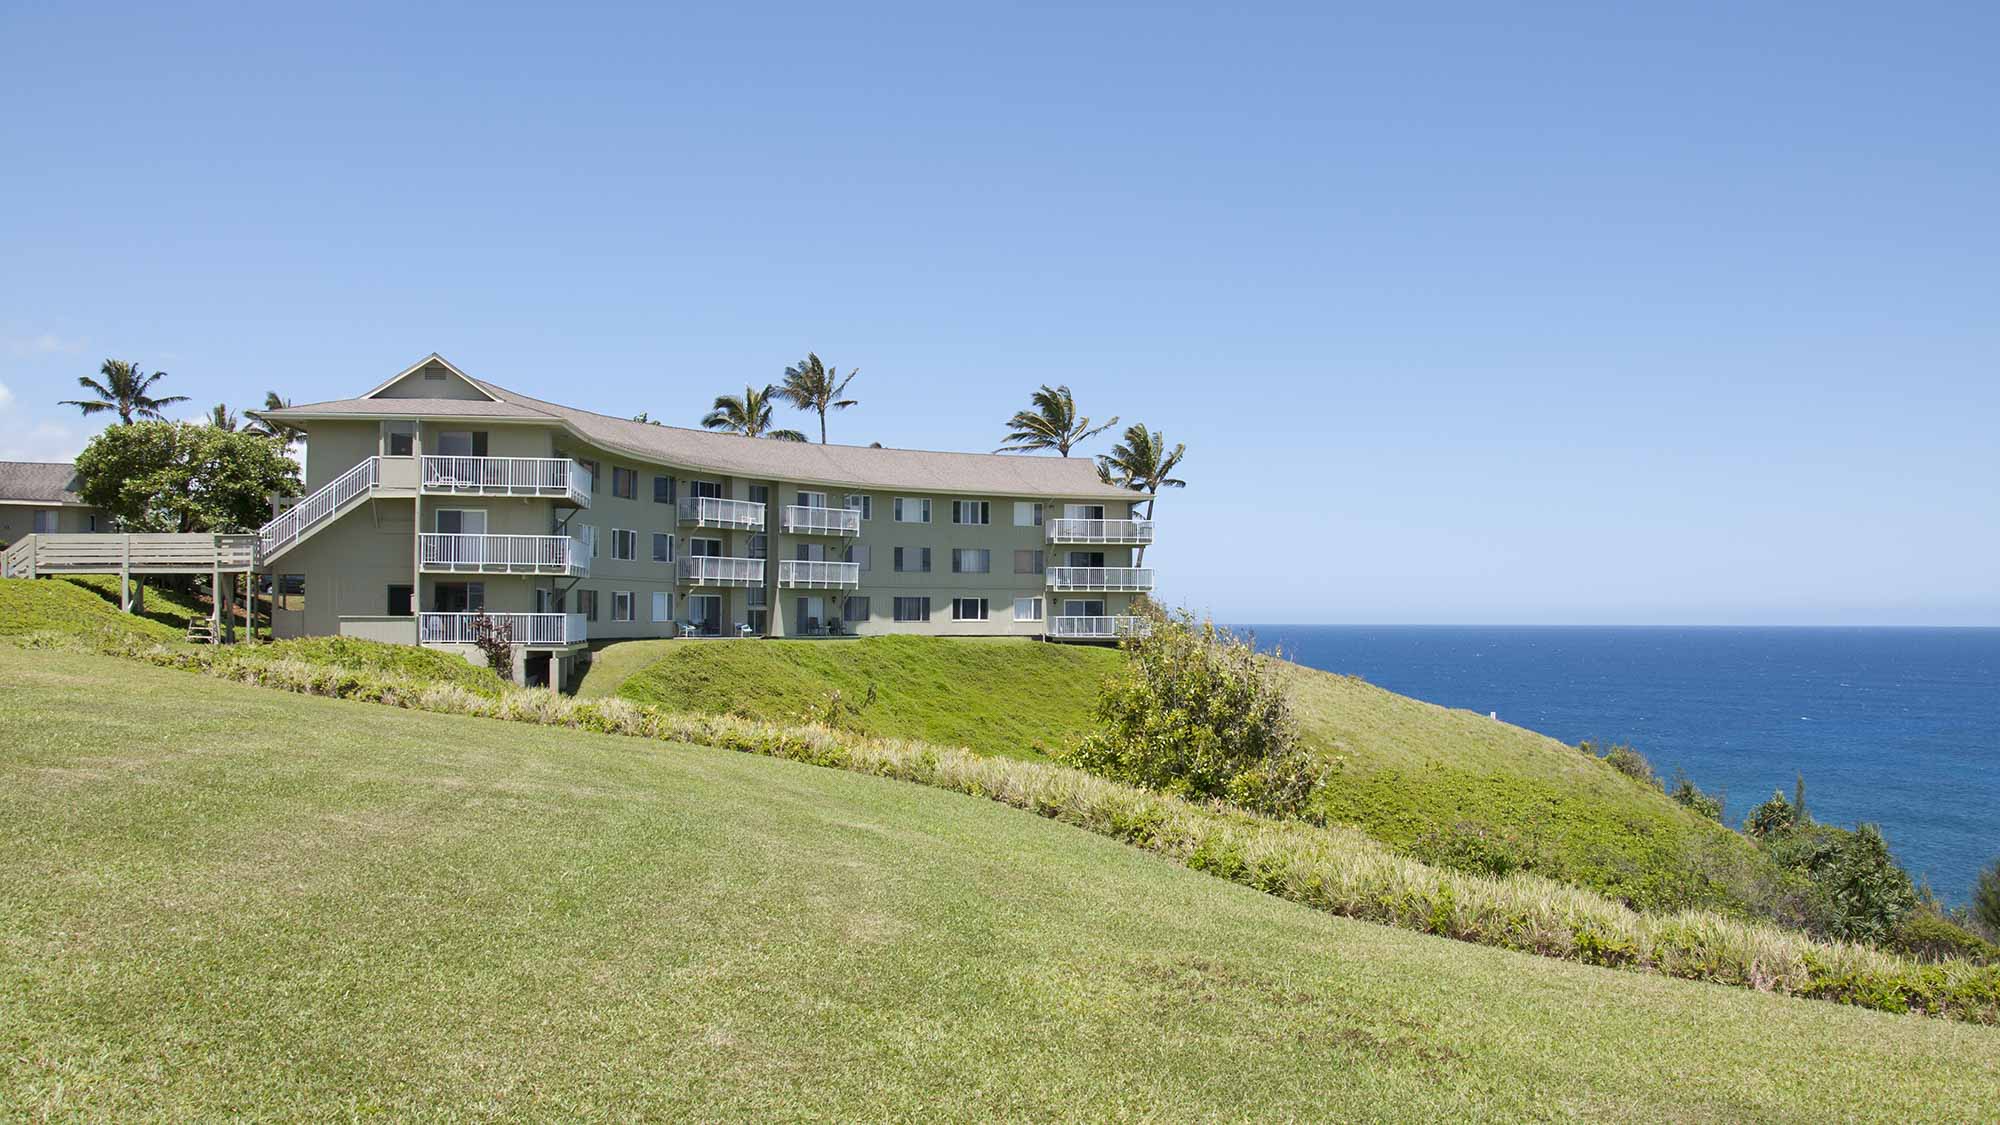 Kai resort alii princeville kauai parrish login parrishkauai